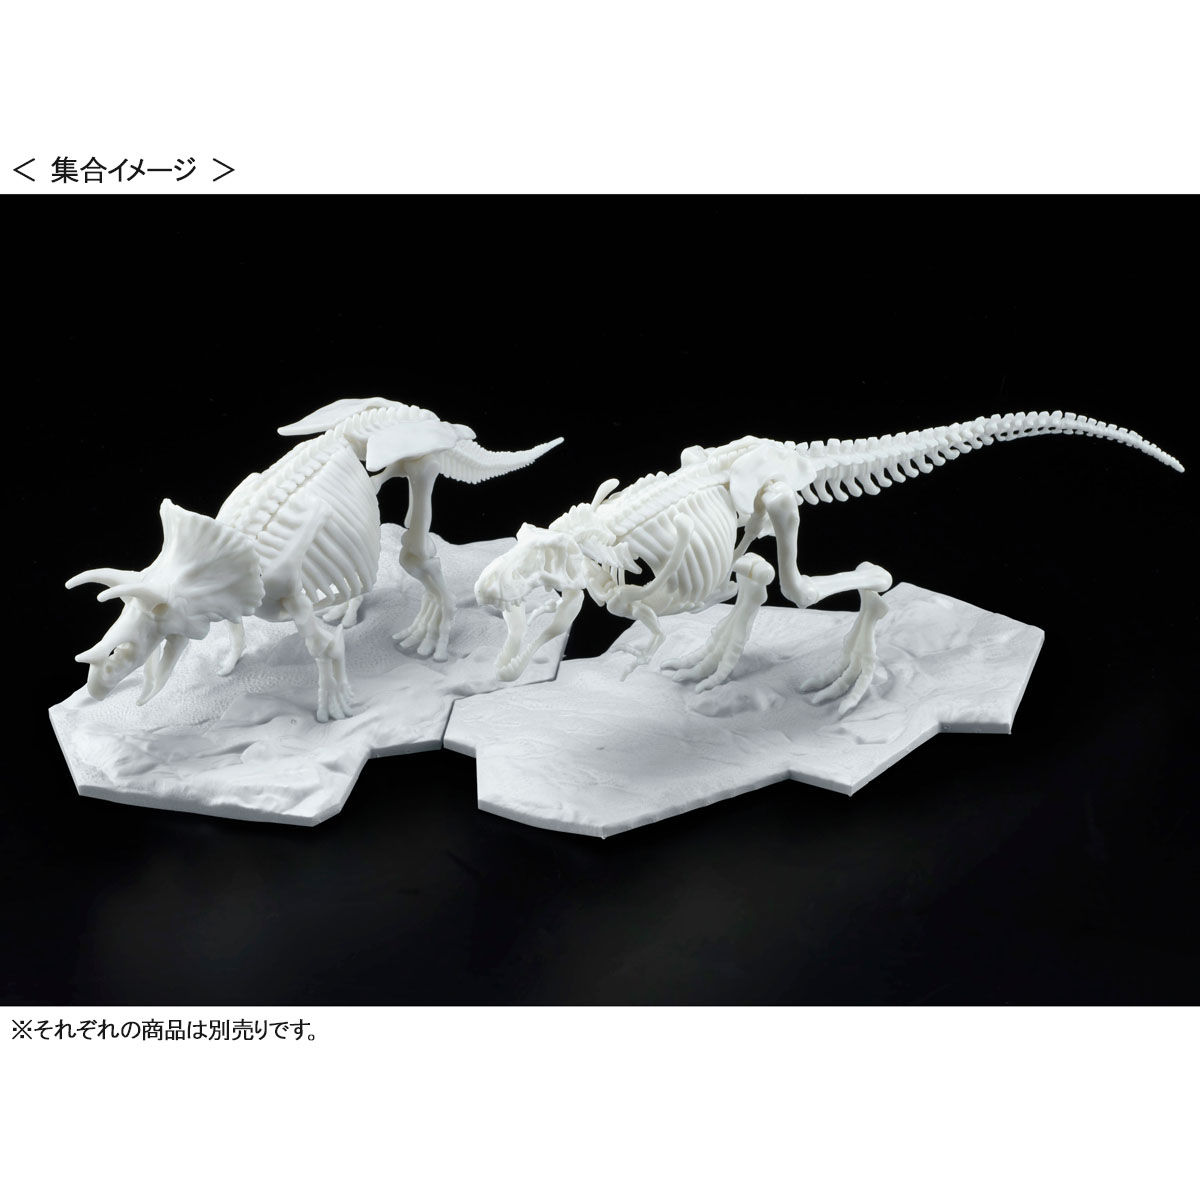 Bandai Spirits 新素材limex採用の恐竜骨格プラモデルシリーズを発表 Hobby Watch